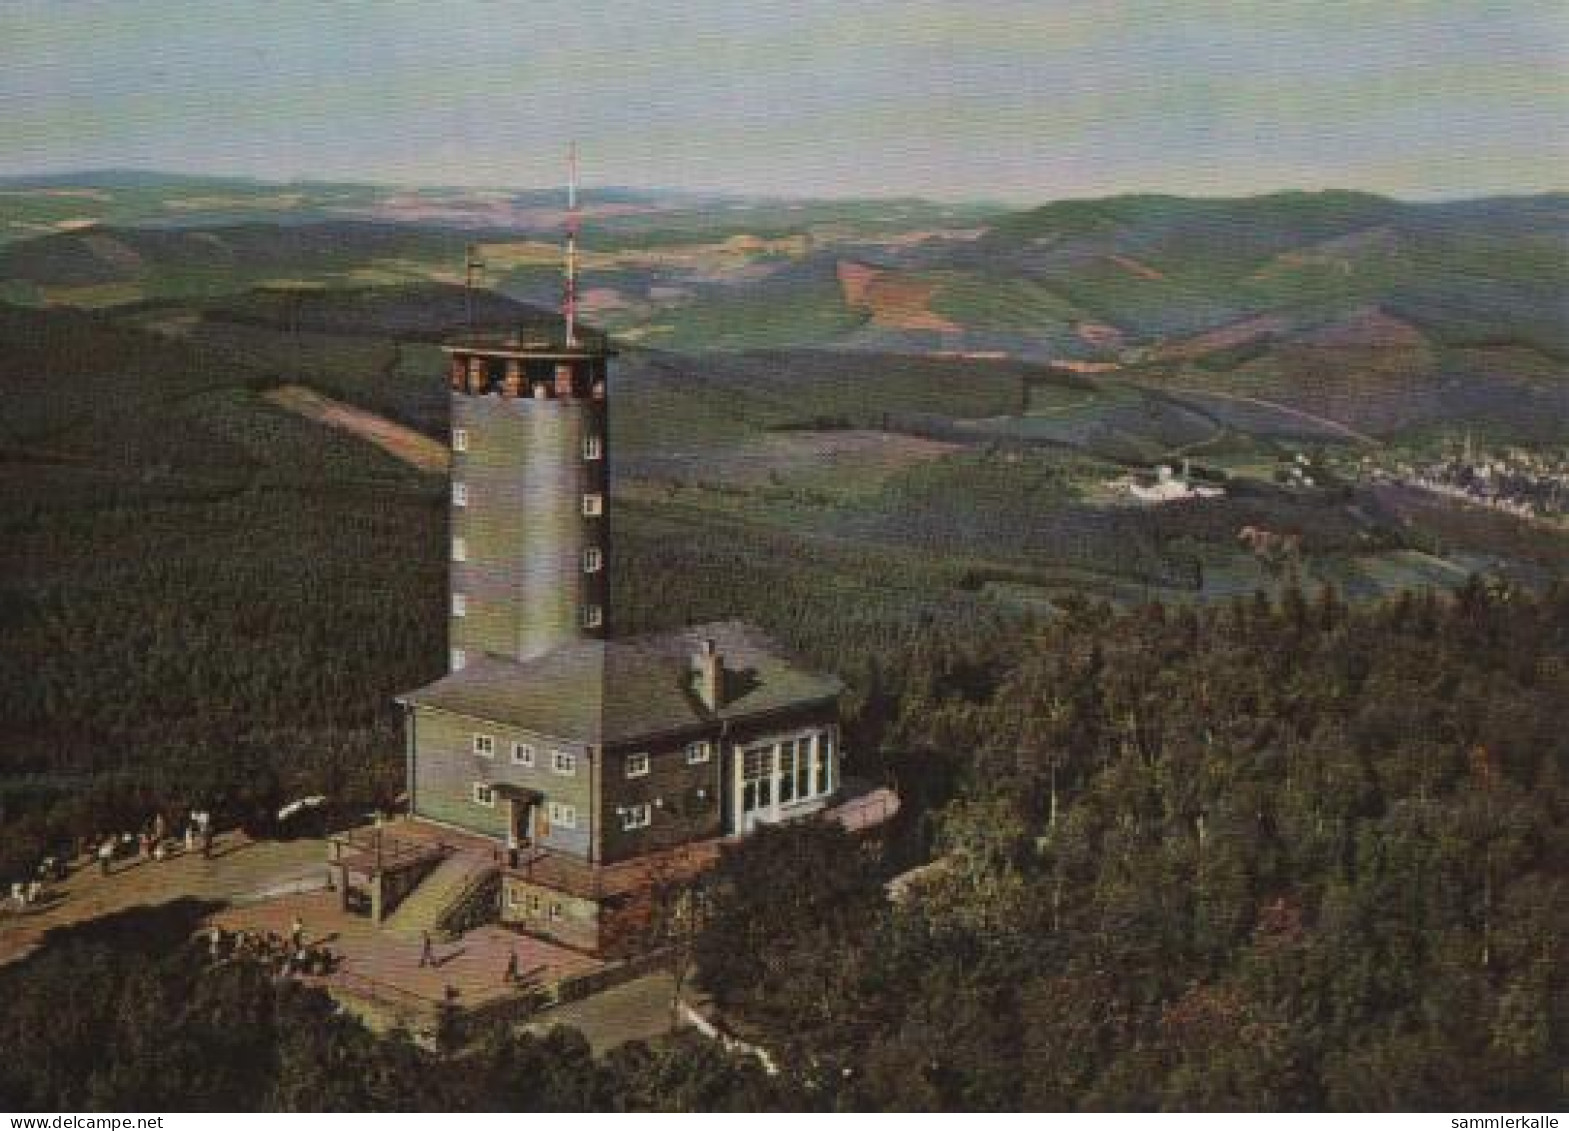 10953 - Kirchhundem Aussichtsturm Luftbild - Ca. 1965 - Olpe